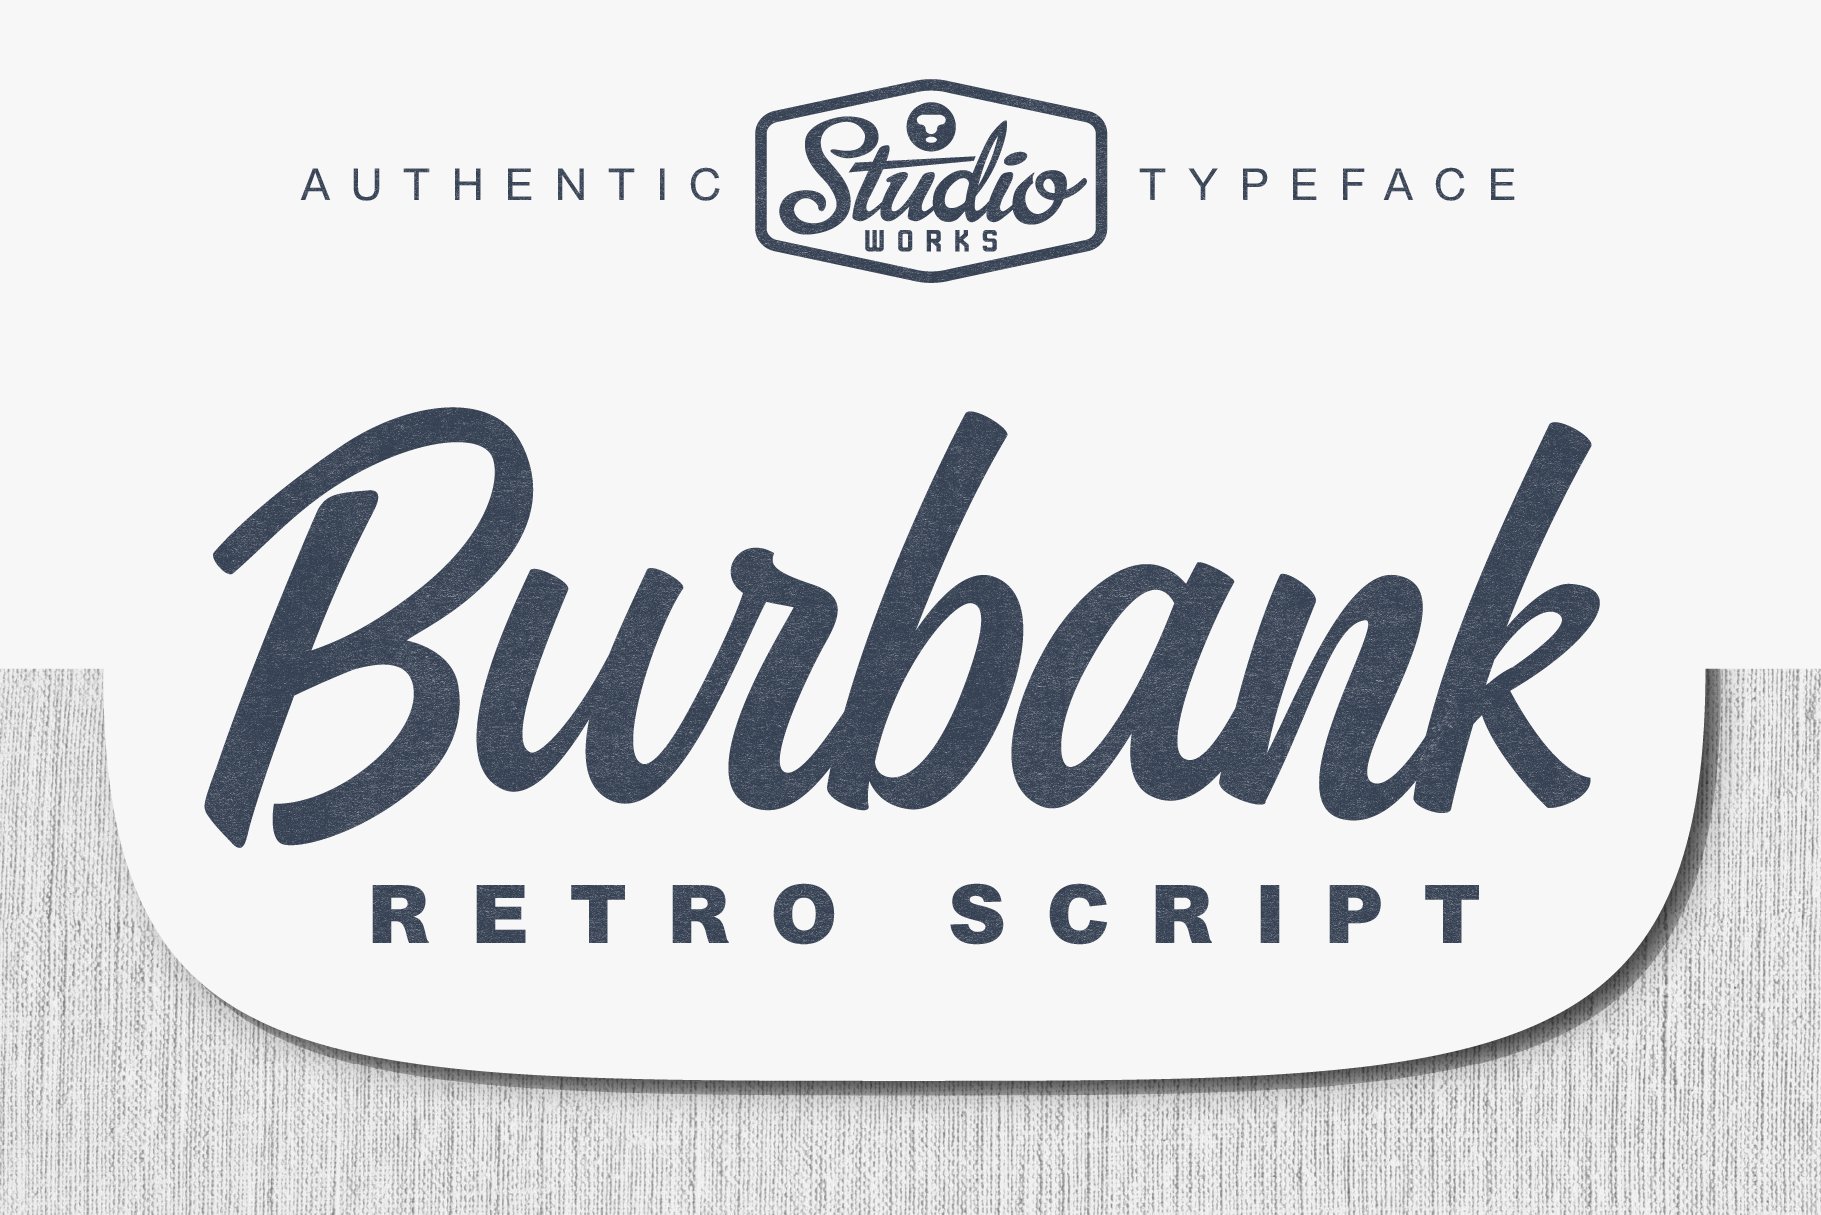 Burbank | Retro Script! cover image.